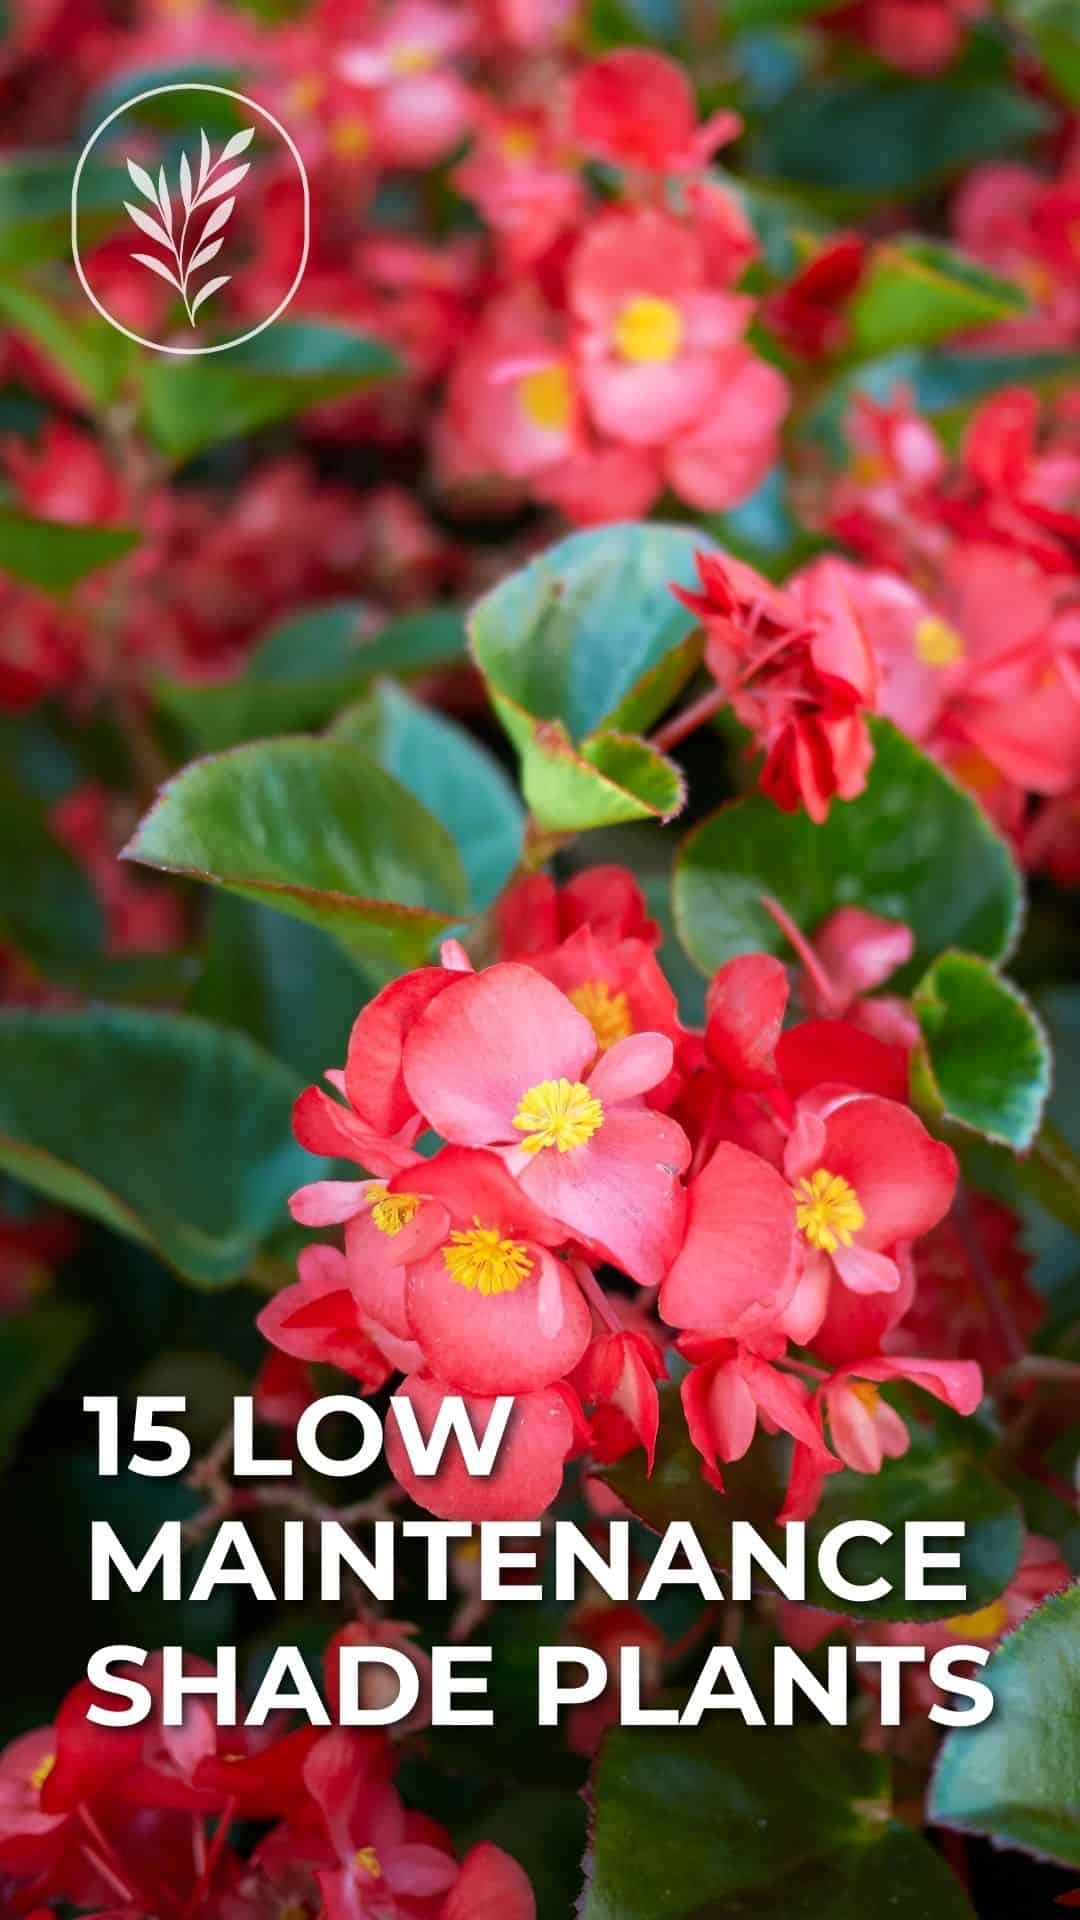 15 low maintenance shade plants - story via @home4theharvest